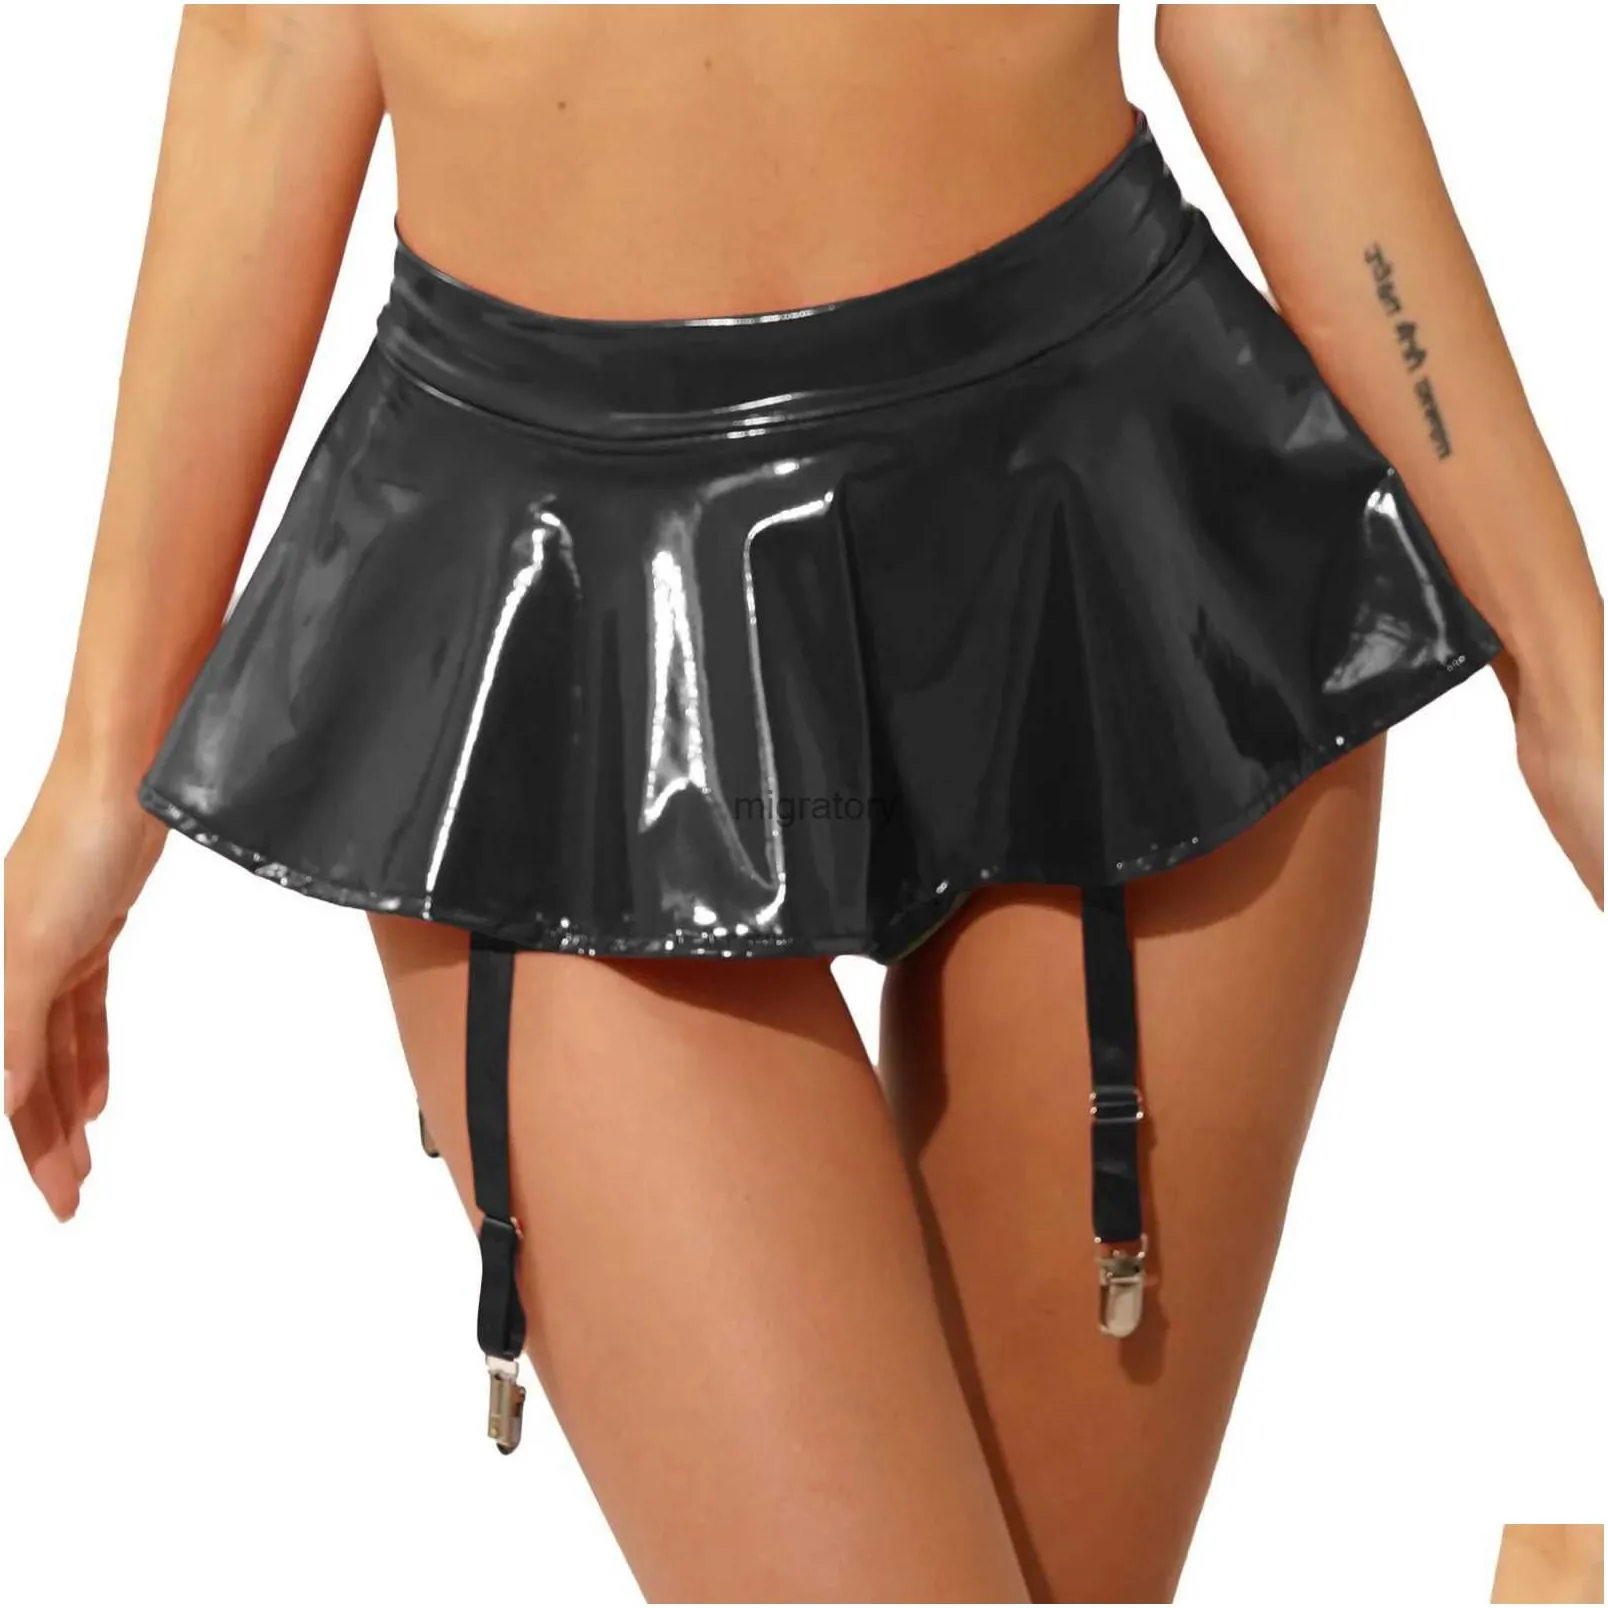 skirts skorts womens wet look patent leather ruffle mini skirt built-in thongs garter belts metal clips lingerie miniskirt rave party clubwear